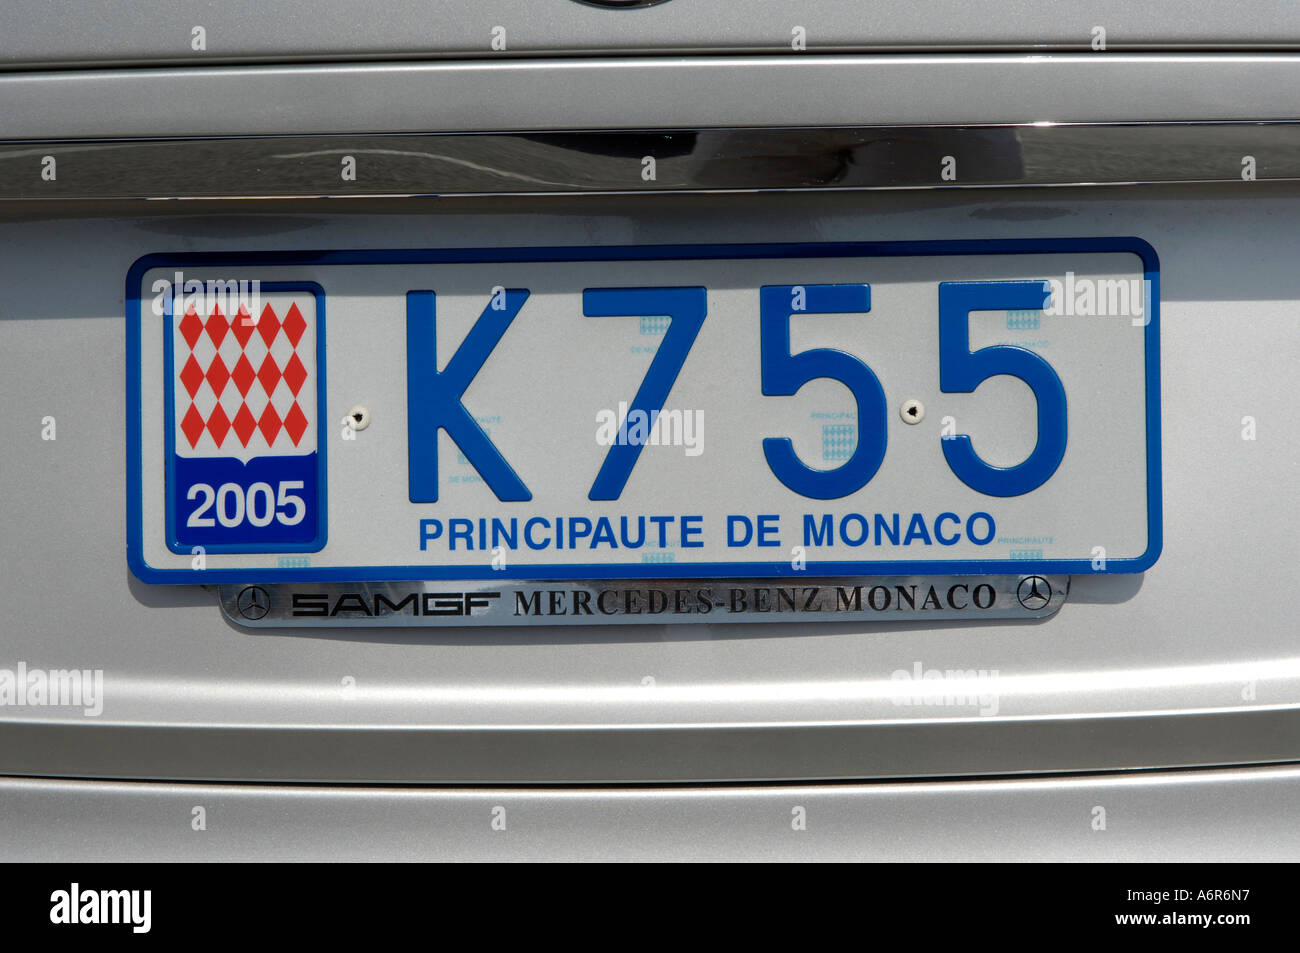 Monaco, number plate Stock Photo - Alamy